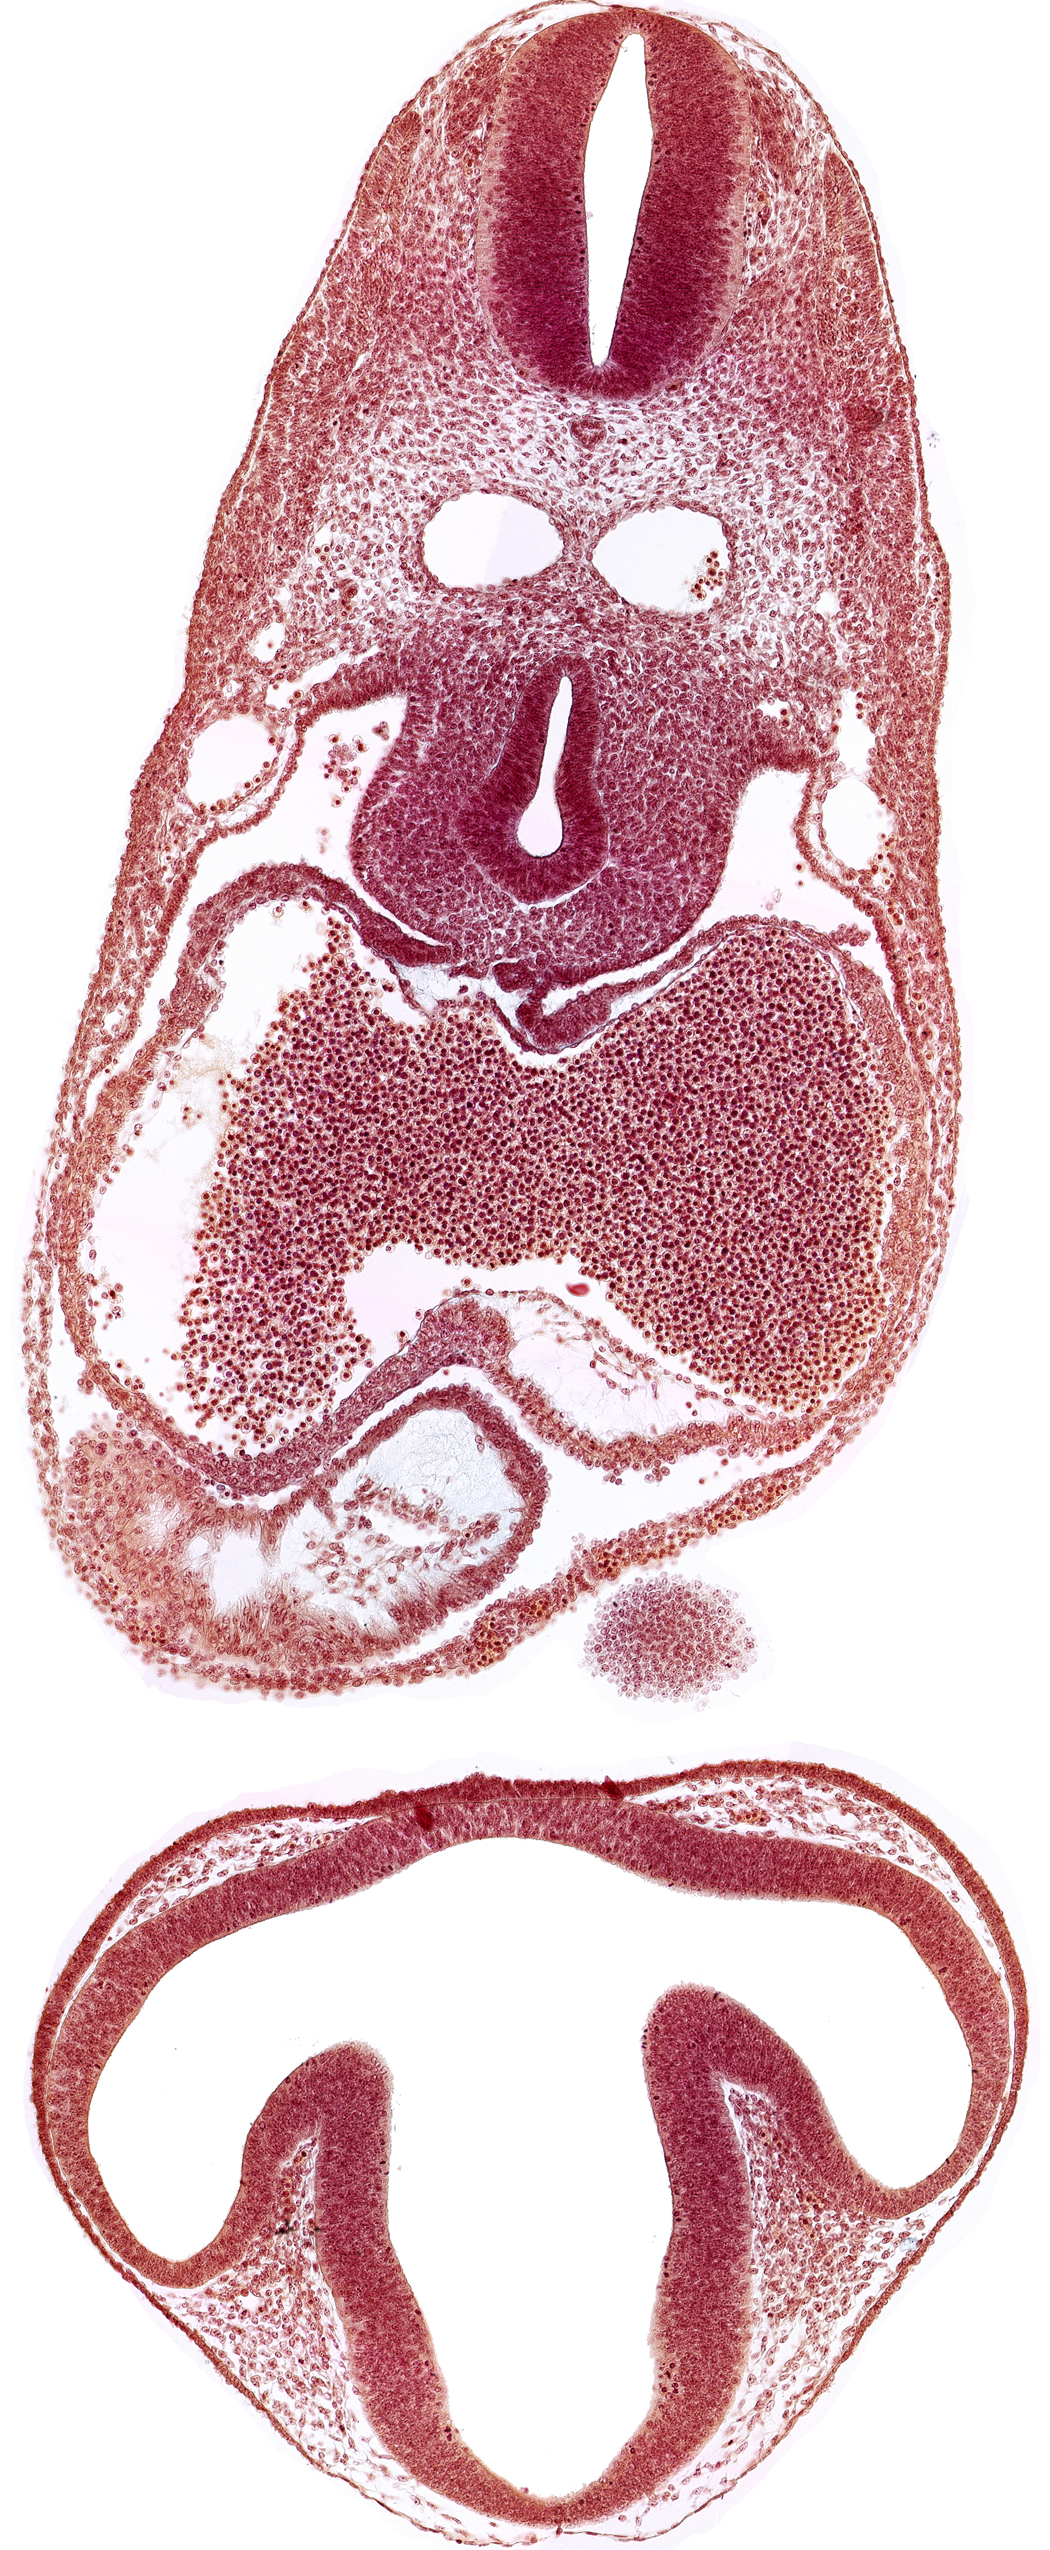 C-2 spinal ganglion primordium, caudal edge of mandibular prominence of pharyngeal arch 1, communication of prosencoel (third ventricle) with optic vesicle, dermatomyotome 6 (C-2), dorsal aorta, dorsal thalamus, epithalamus, left atrium, mesocardium, notochord, optic vesicle, pericardial cavity, precardinal vein, prosencoel (third ventricle), right atrial wall, right ventricle, tracheo-esophageal tube, ventral thalamus